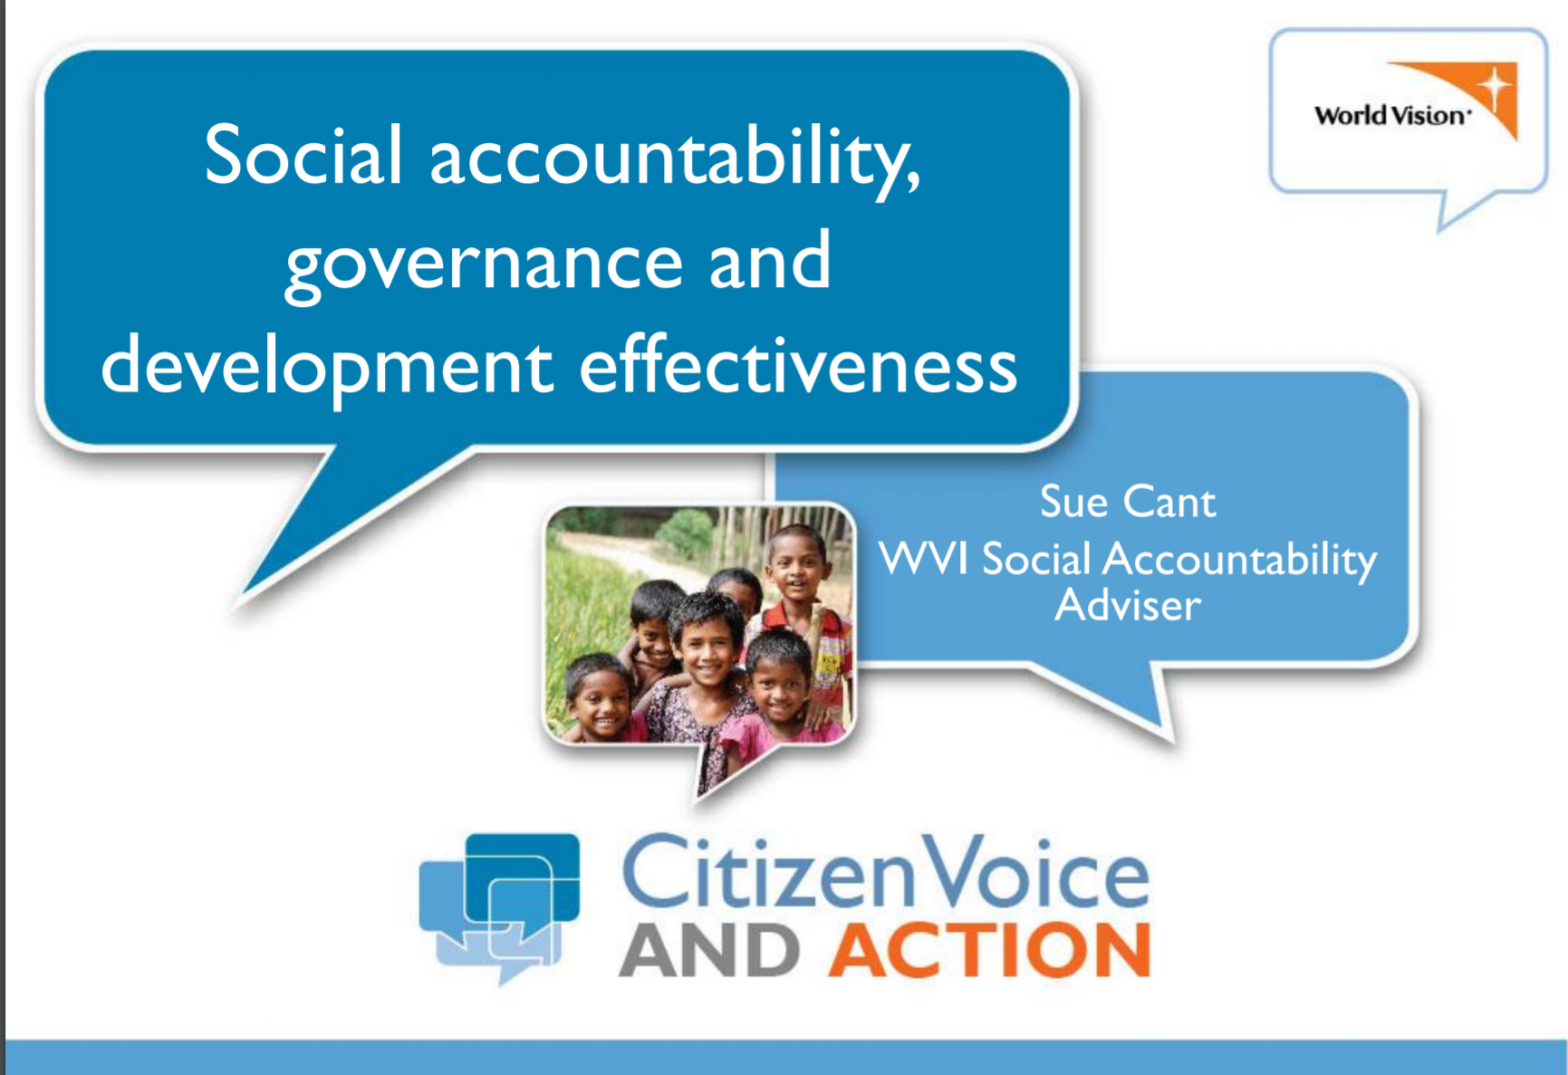 Citizen, Voice and Action (CVA)